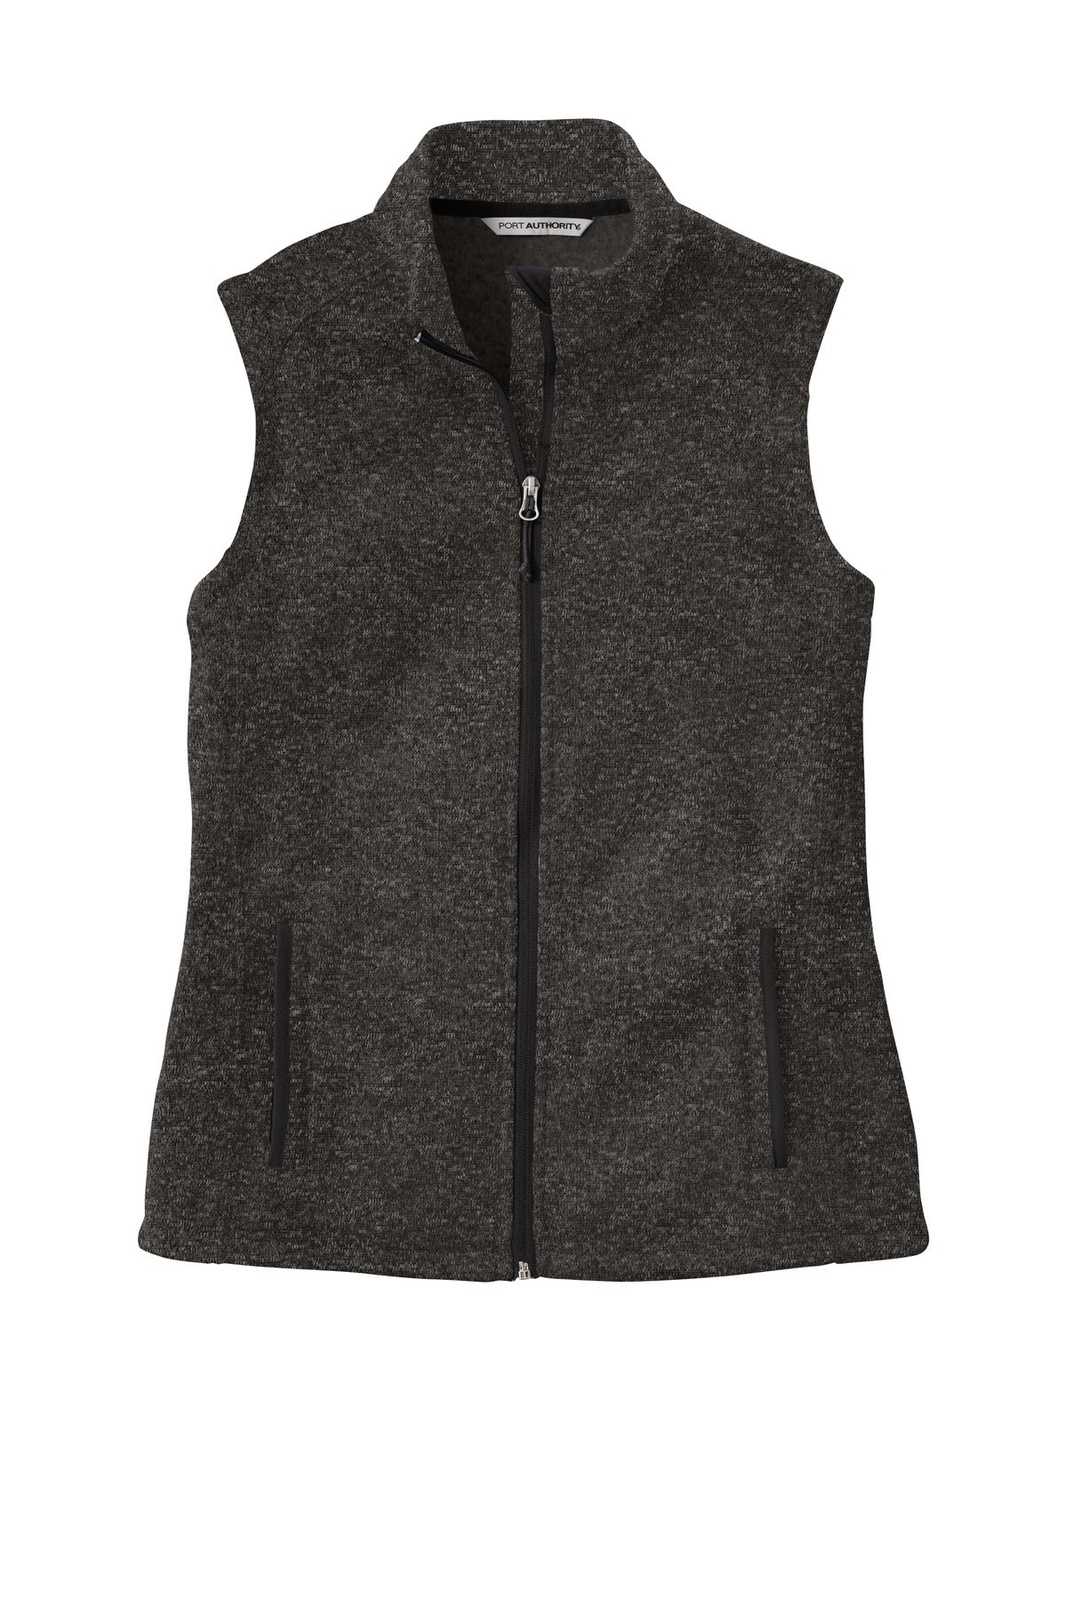 Port Authority L236 Ladies Sweater Fleece Vest - Black Heather - HIT a Double - 5